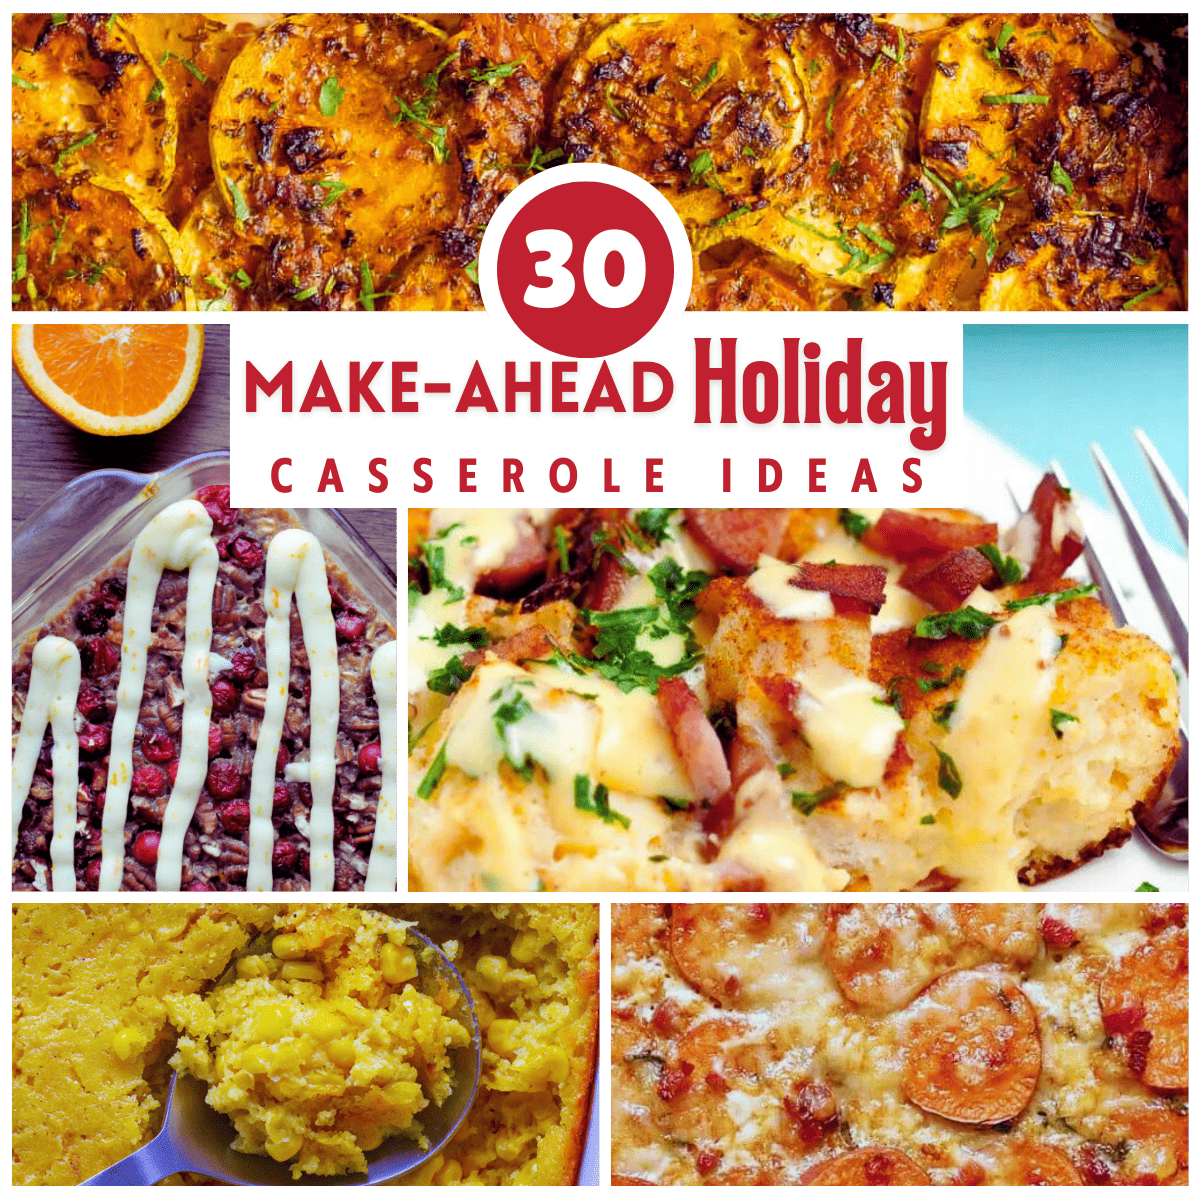 5 image collage for 30 make ahead holiday casserole ideas Roundup with squash casserole, oatmsal casserole, eggs benedict casserole, corn casserole and sweet potato casserole